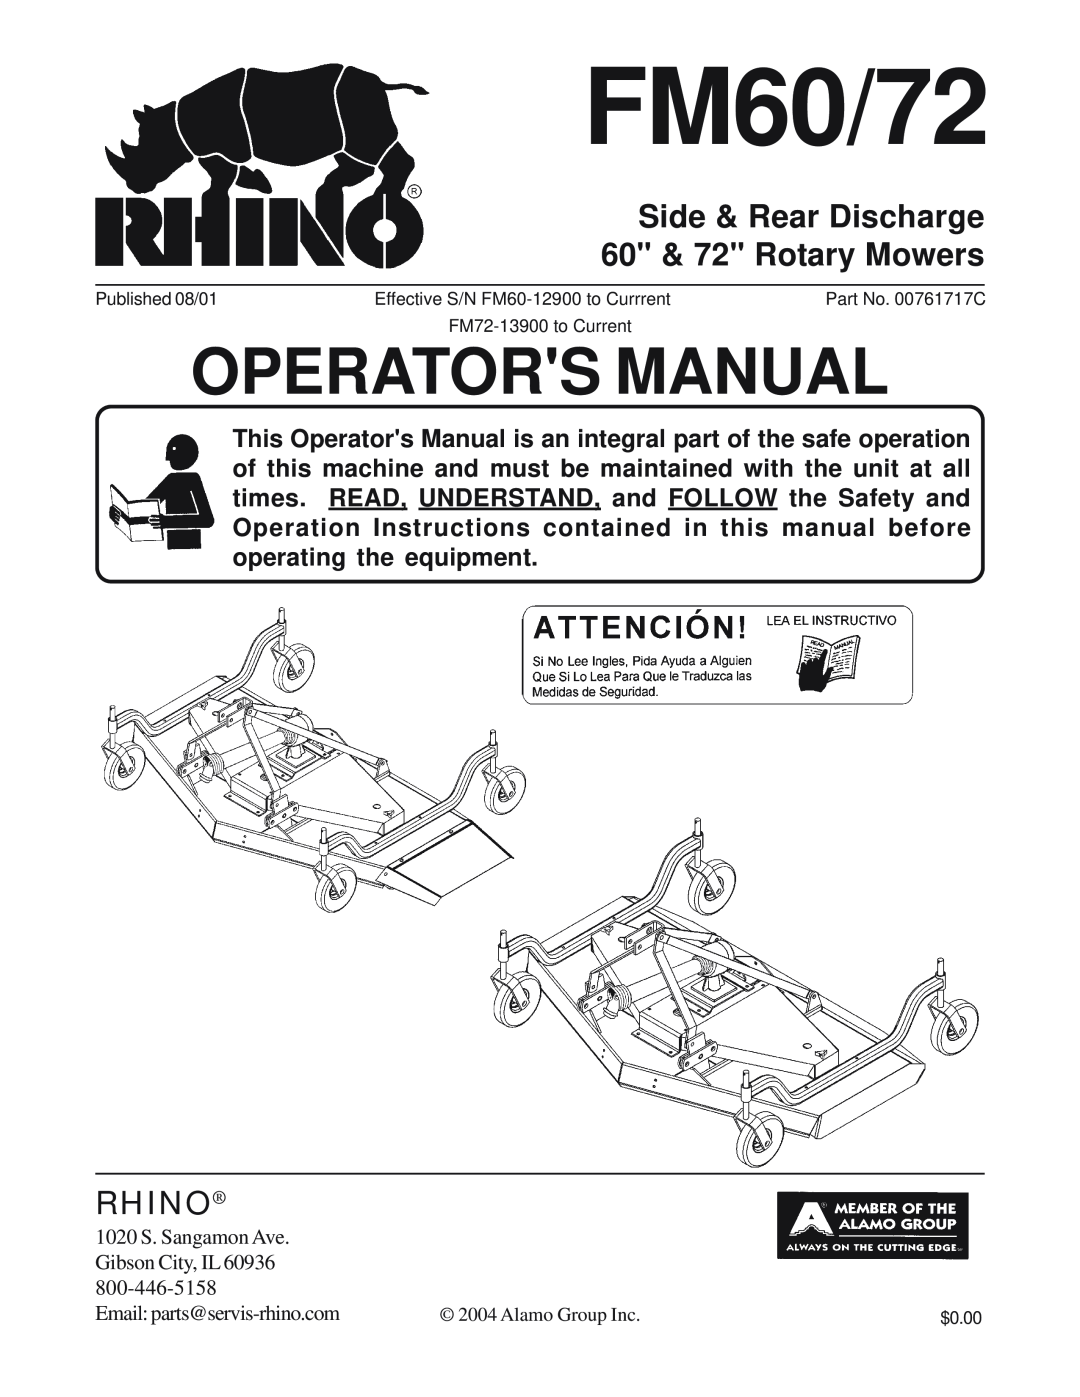 Servis-Rhino FM60/72 manual Side & Rear Discharge 60 & 72 Rotary Mowers, Rhino, Operators Manual 